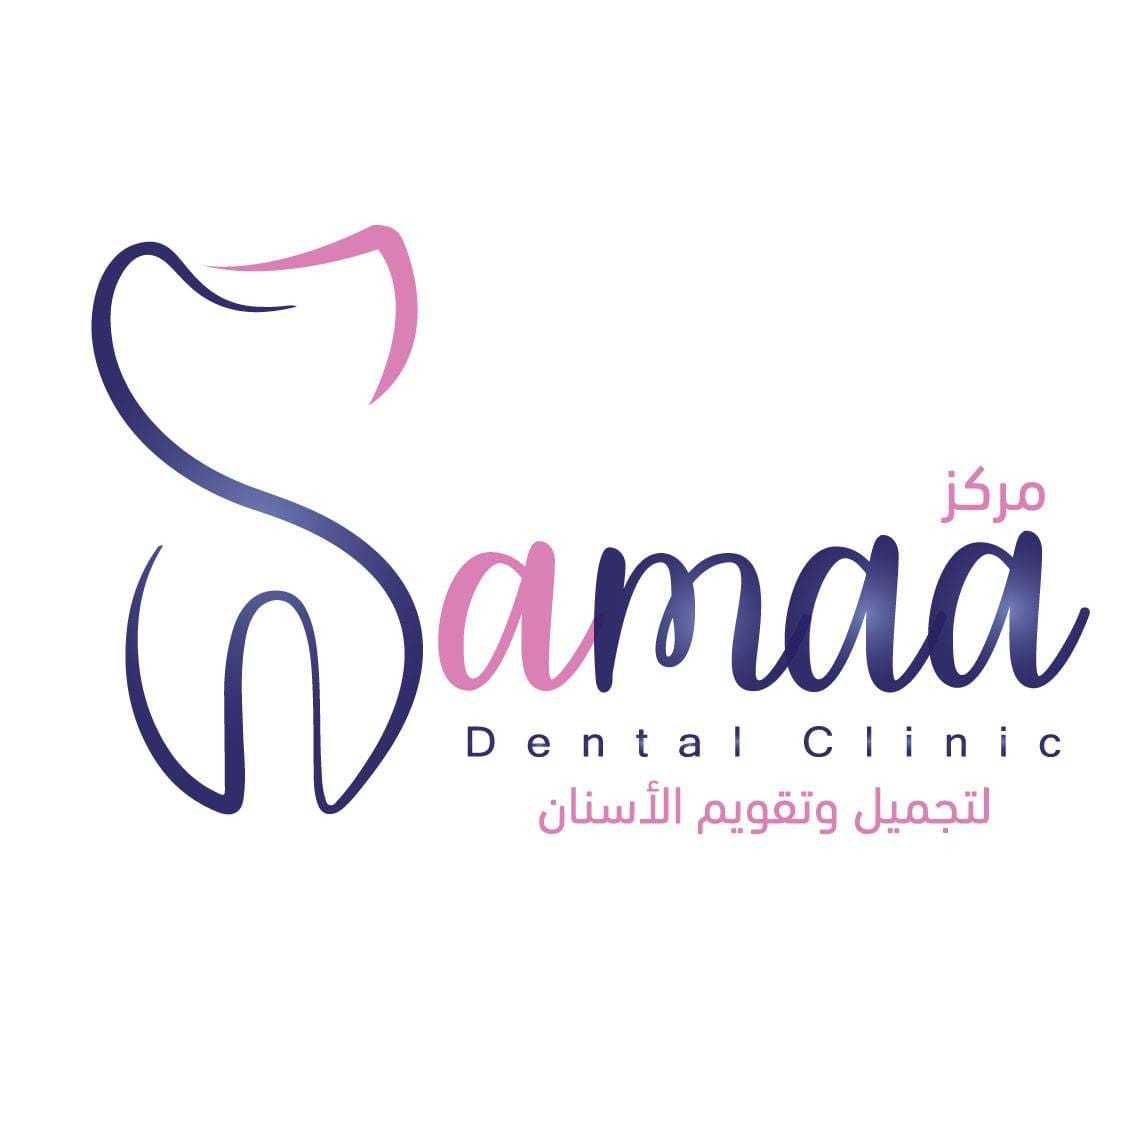 Dr Samaa Dental Clinic